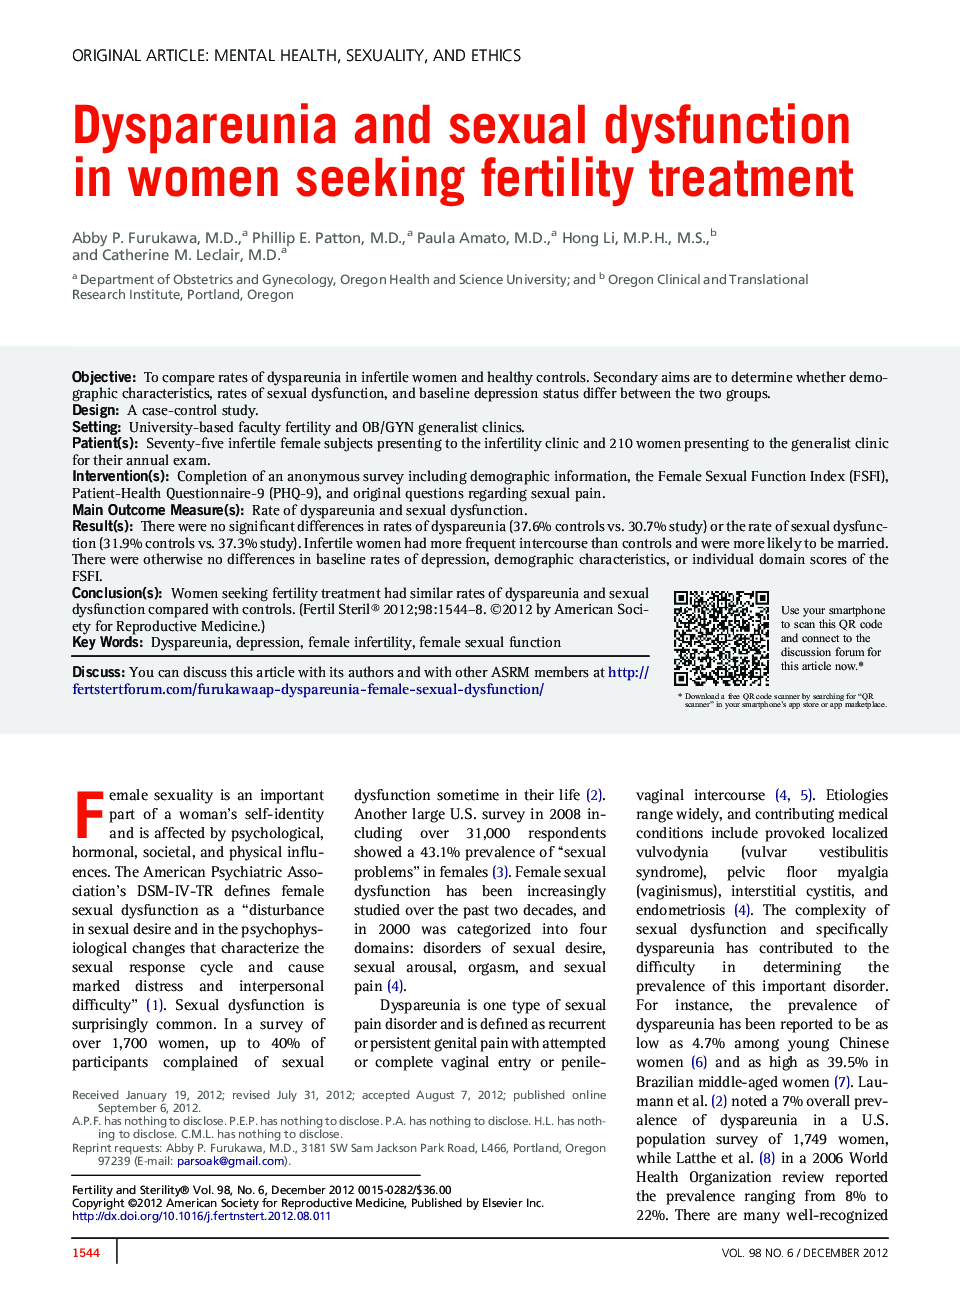 Dyspareunia and sexual dysfunction in women seeking fertility treatment